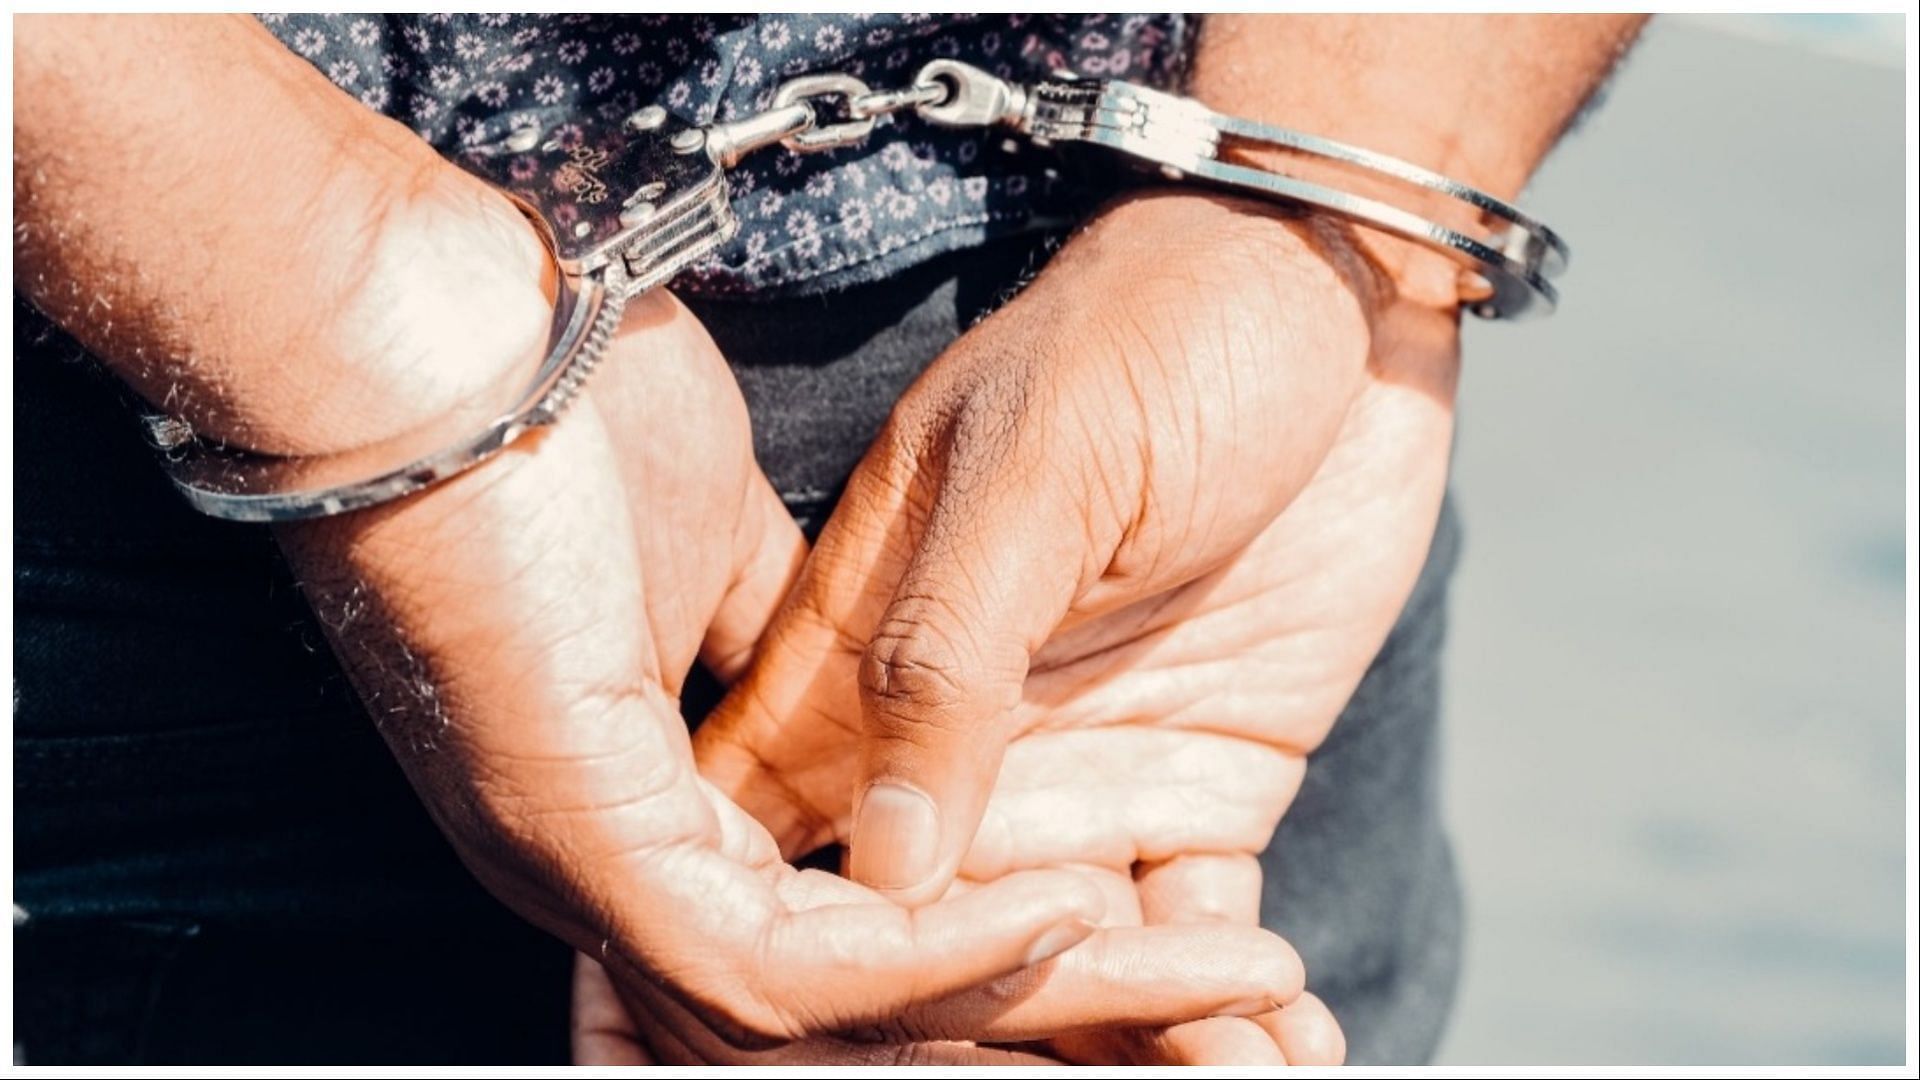 Dustin Duren was arrested in Keene on Friday, (Image via Pexels) 